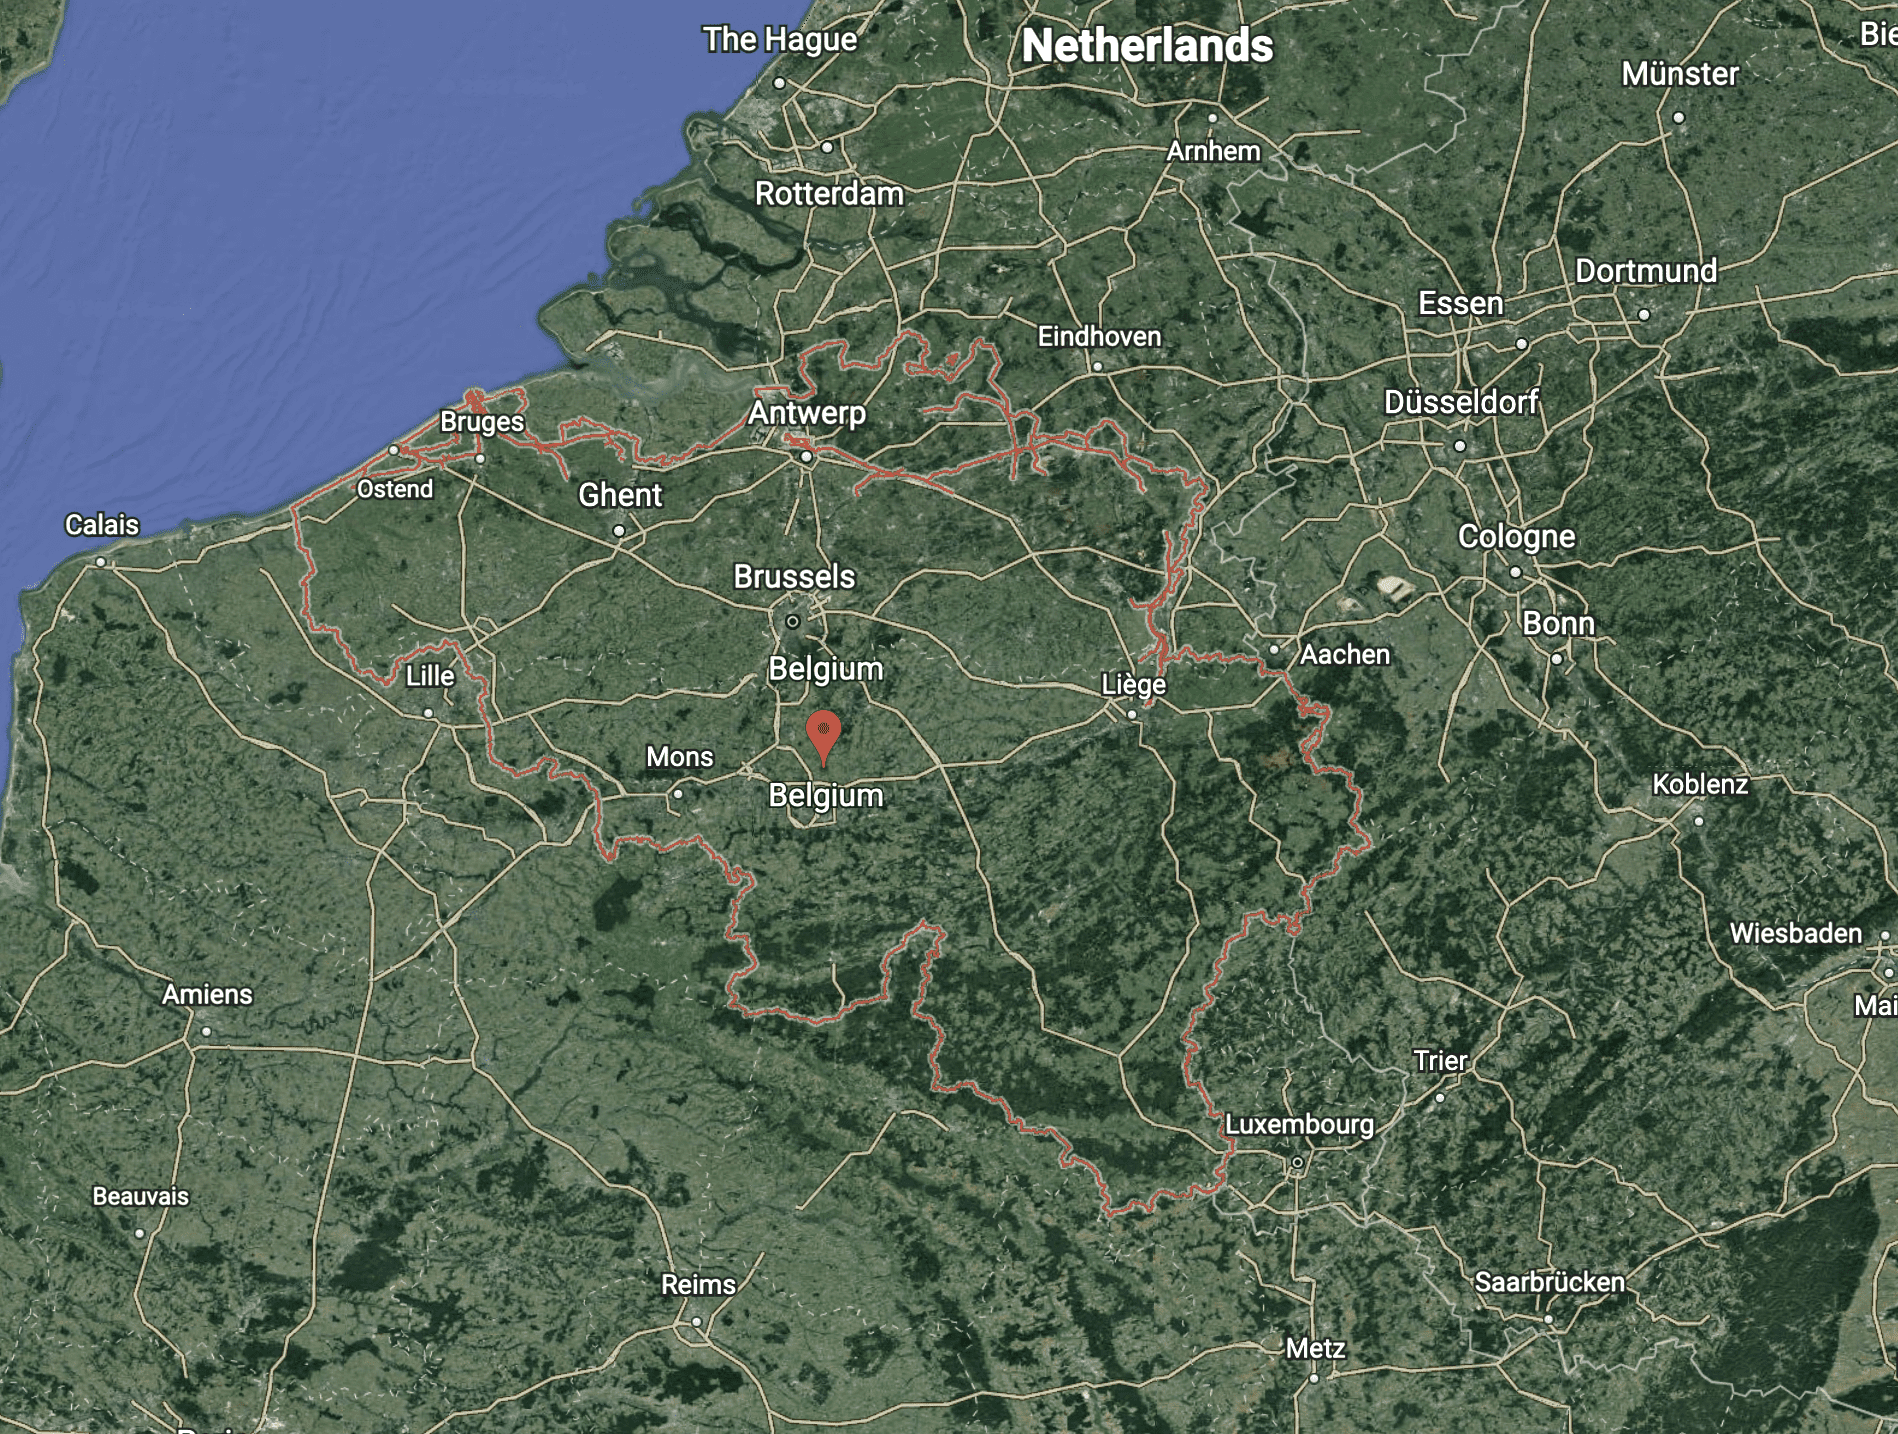 Google Earth Satellite Image of Belgium